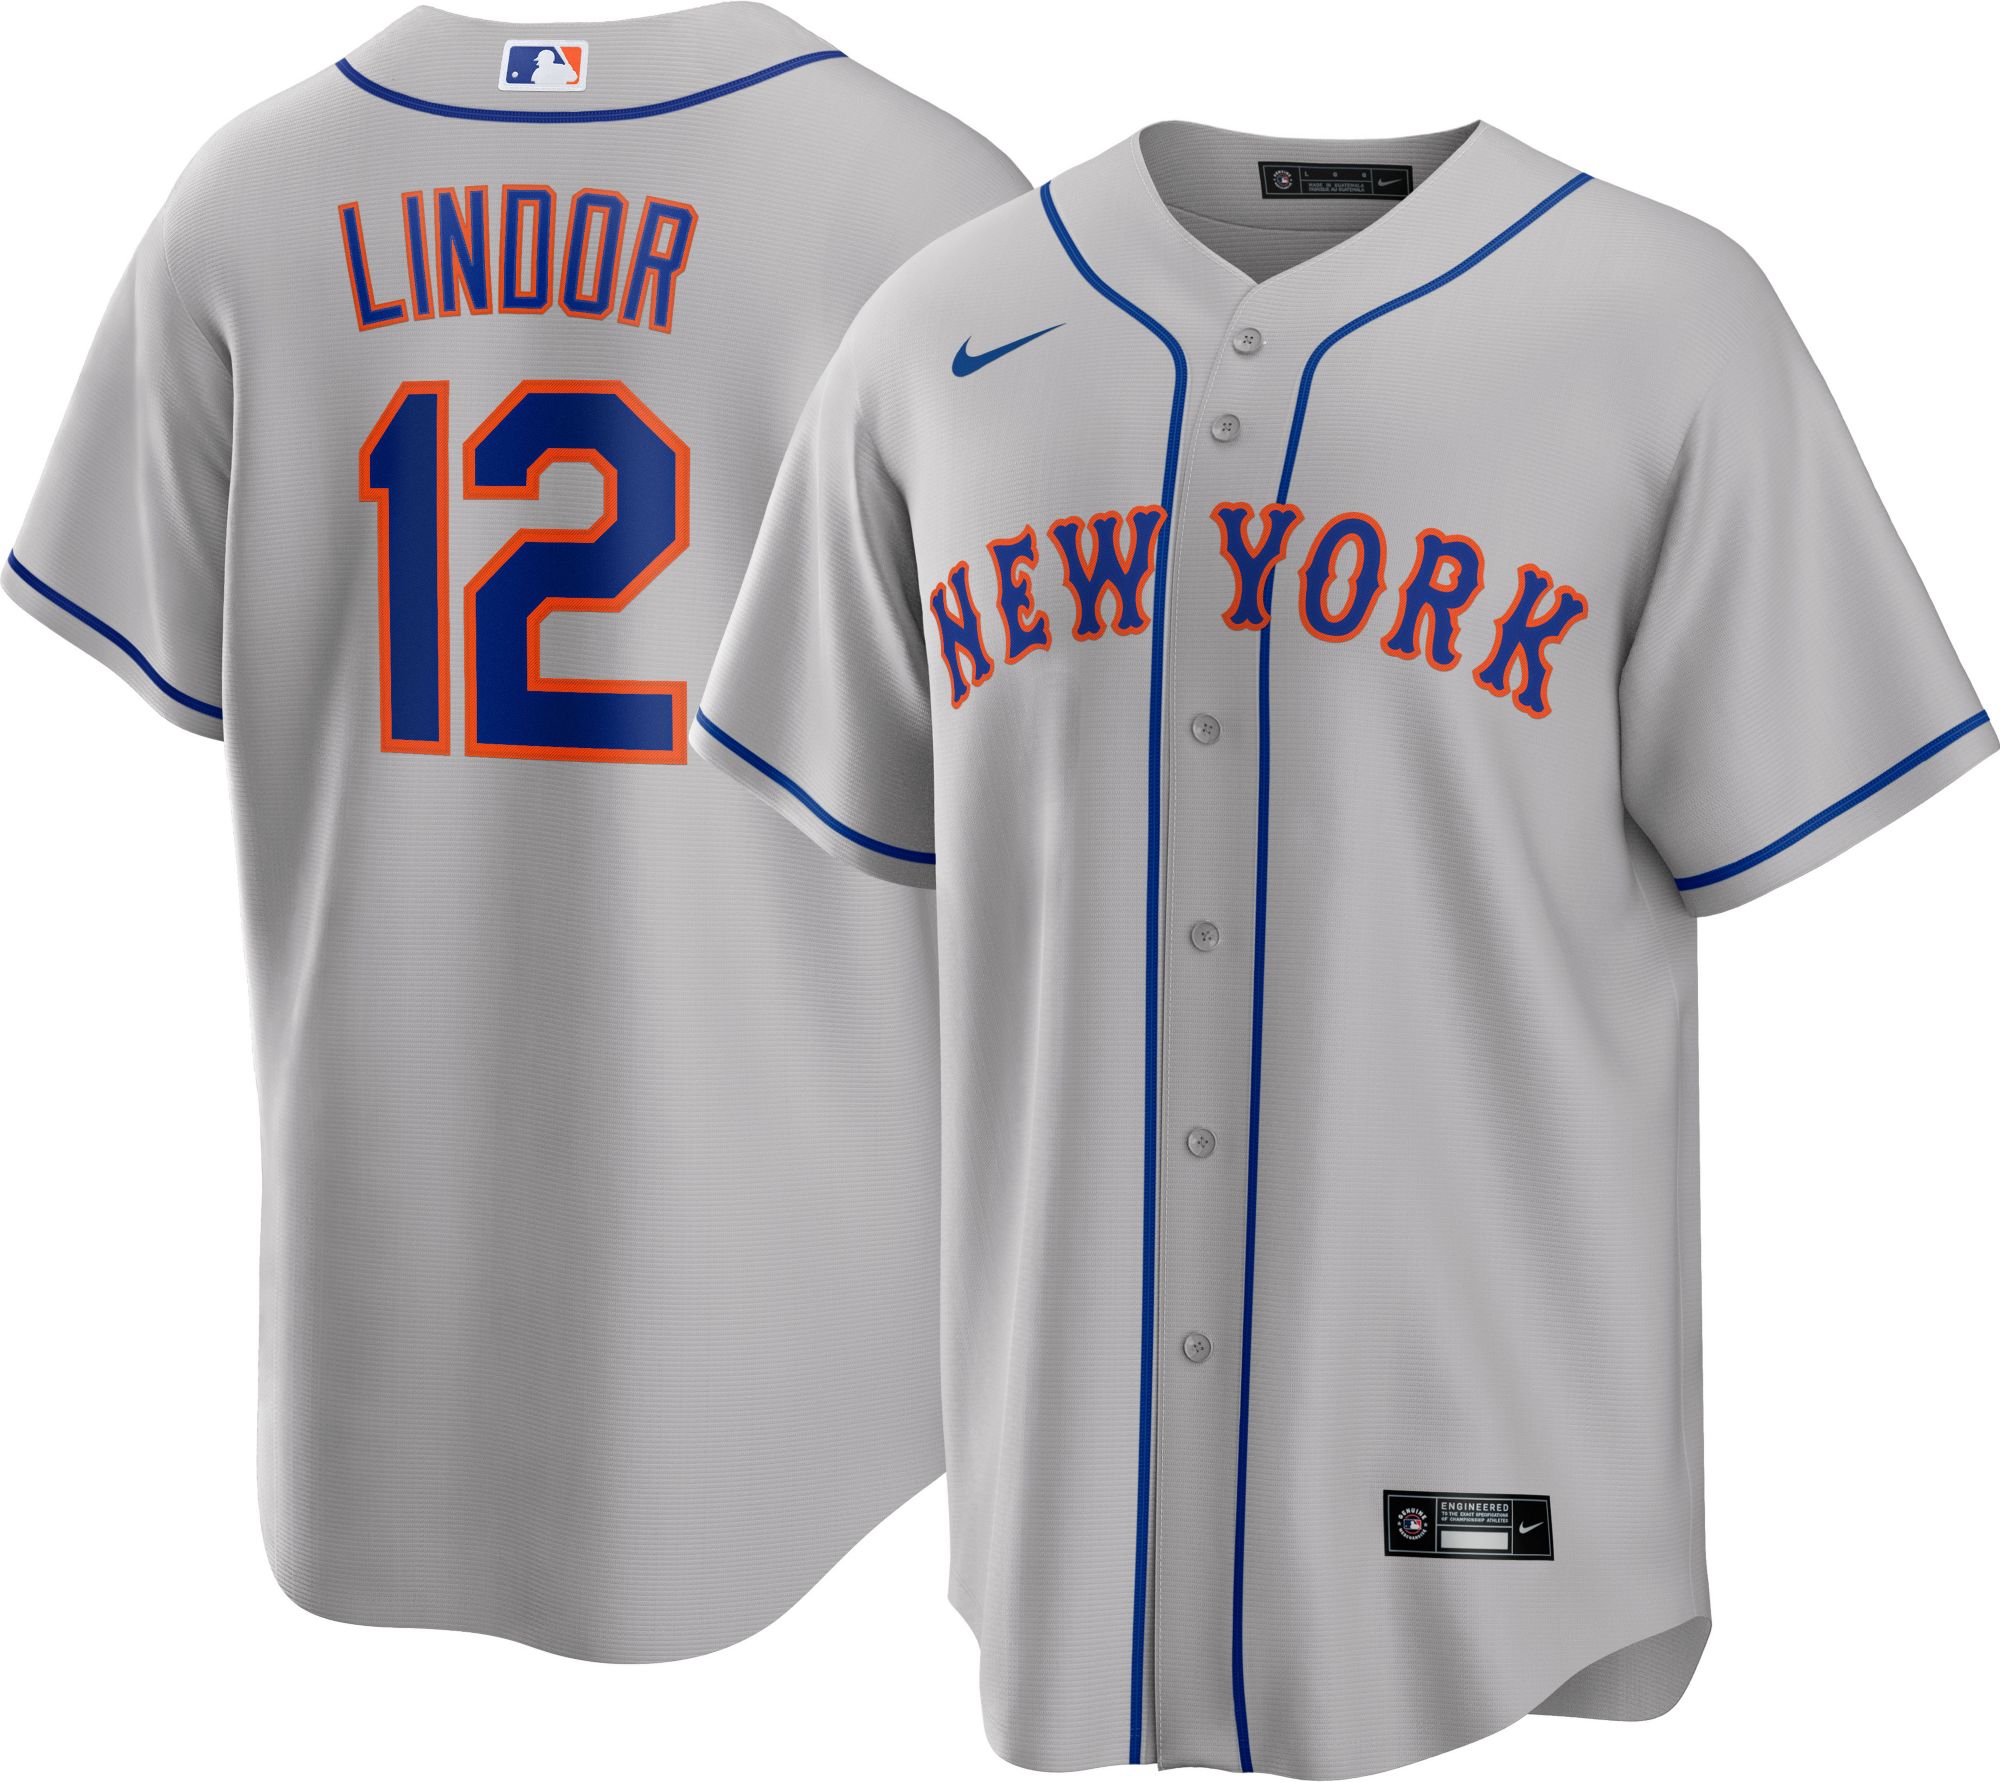 Nike / Men's New York Mets Francisco Lindor #12 Grey Cool Base